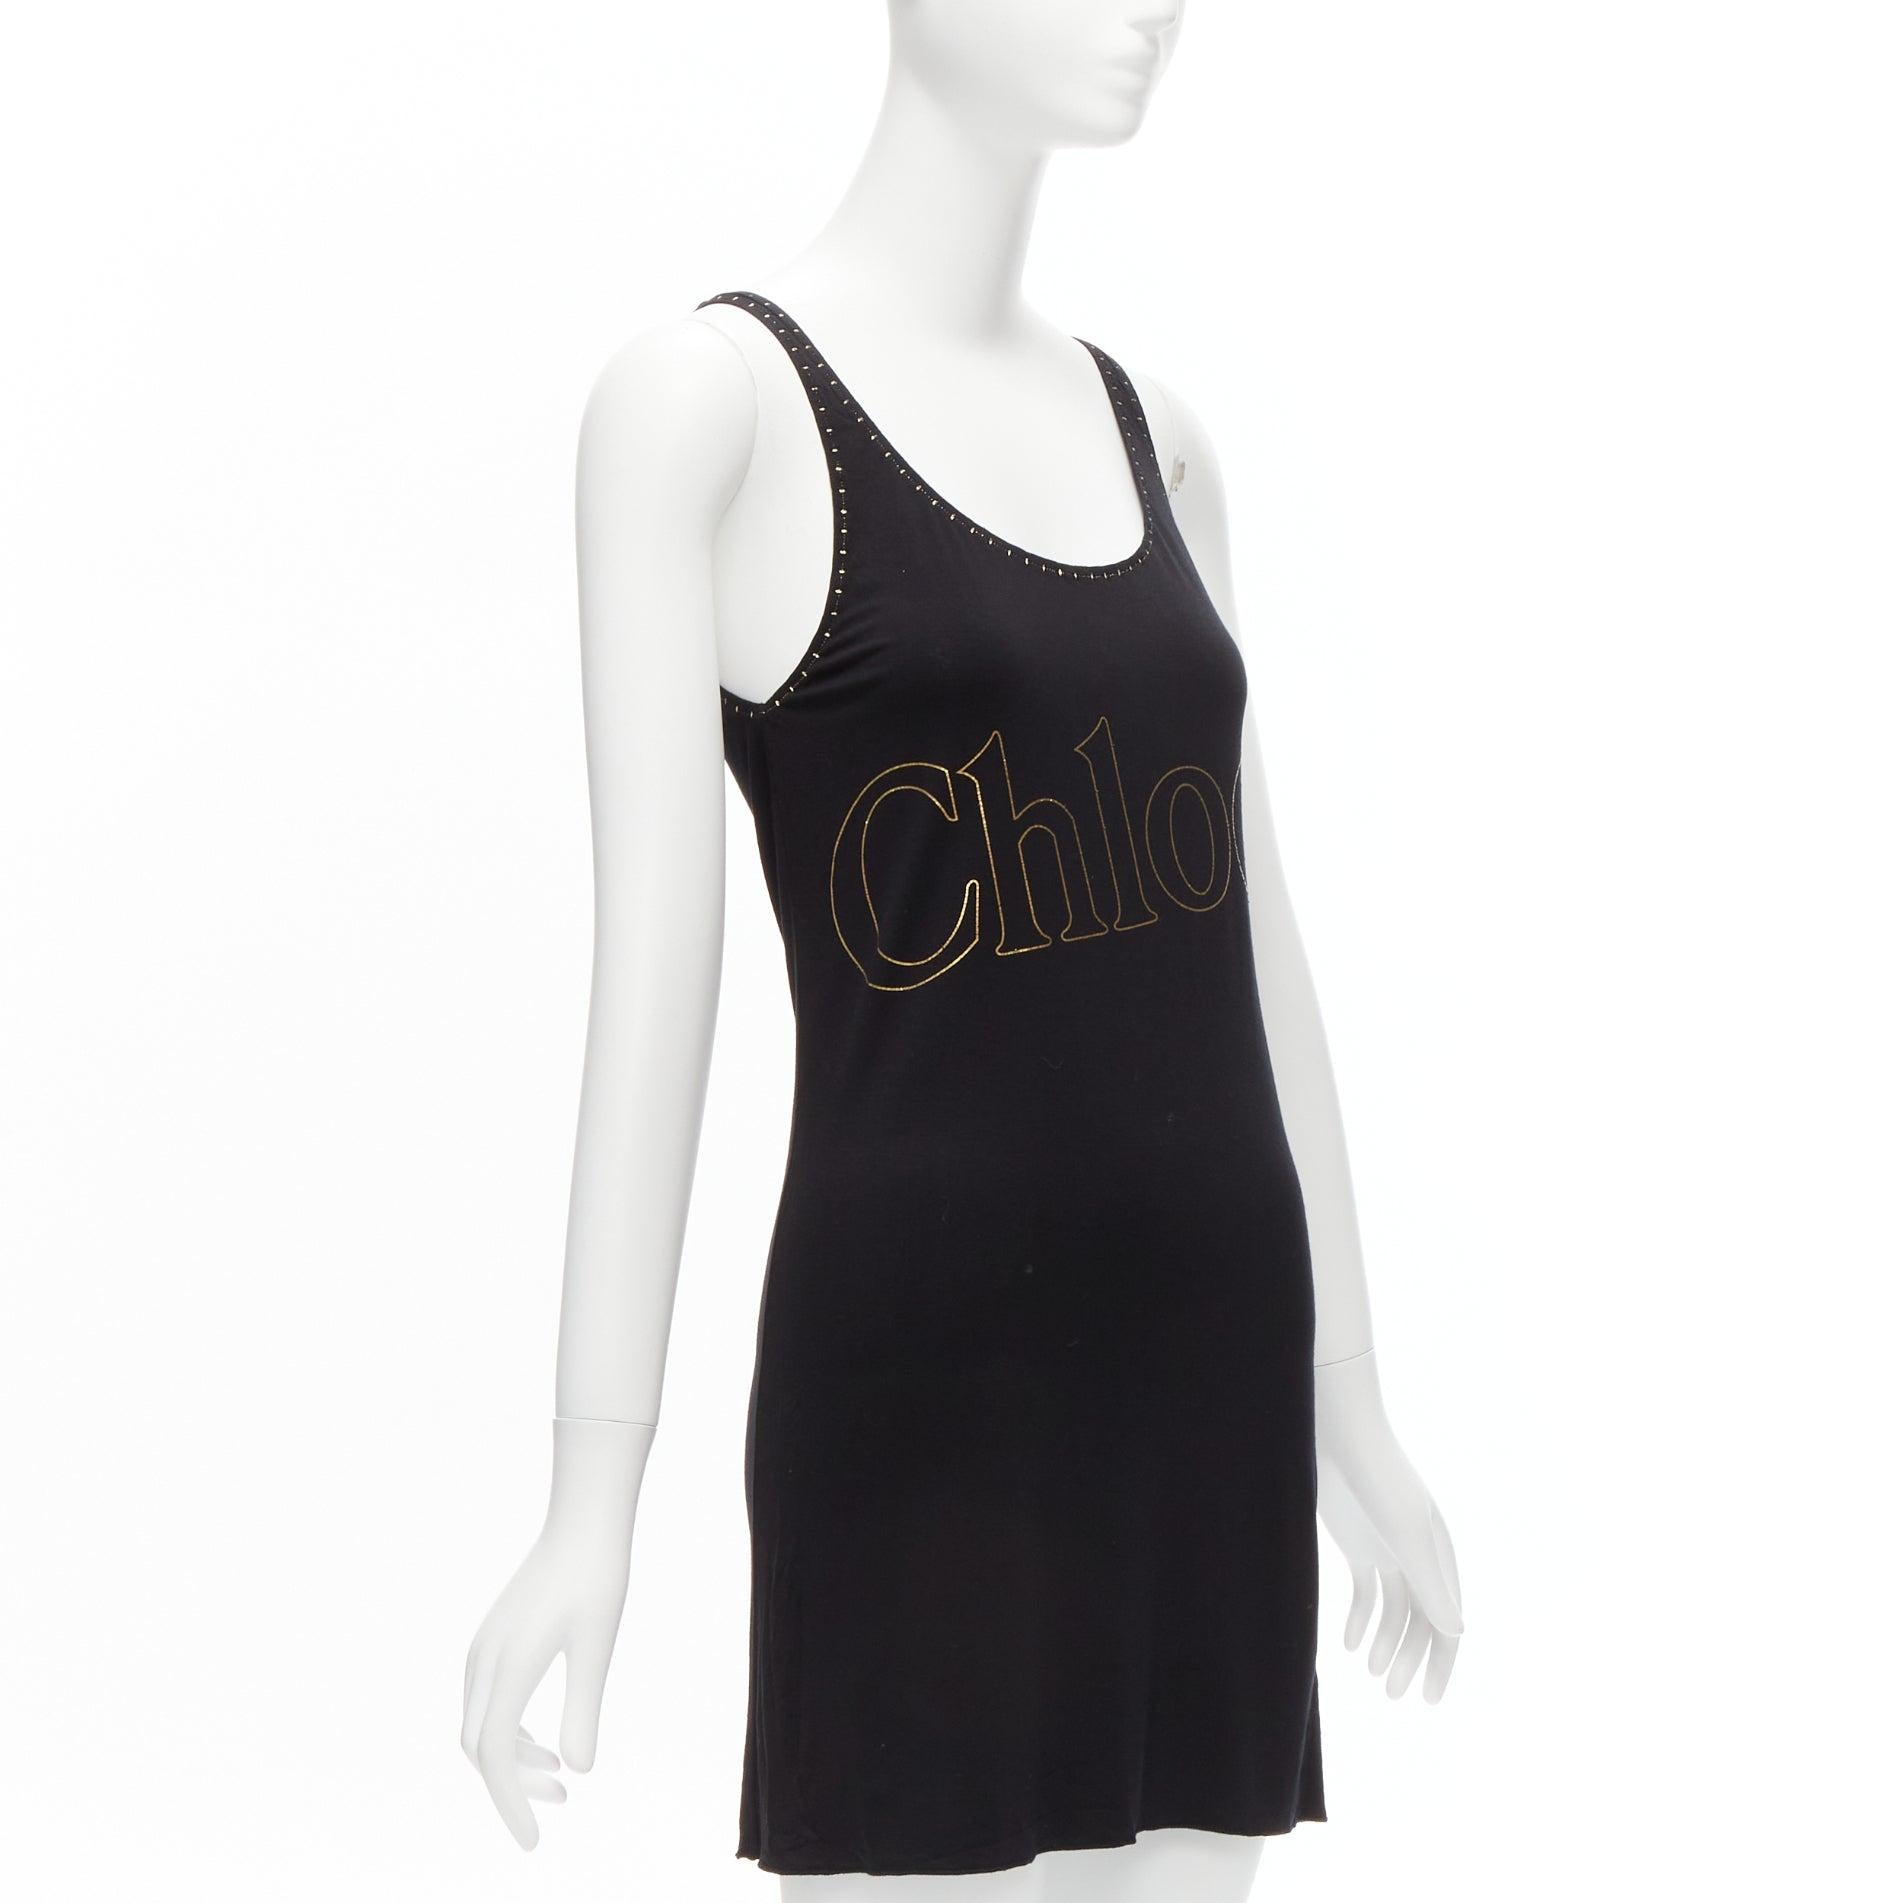 Black CHLOE gold foil logo black topstitch detail rock chic tank top dress S For Sale